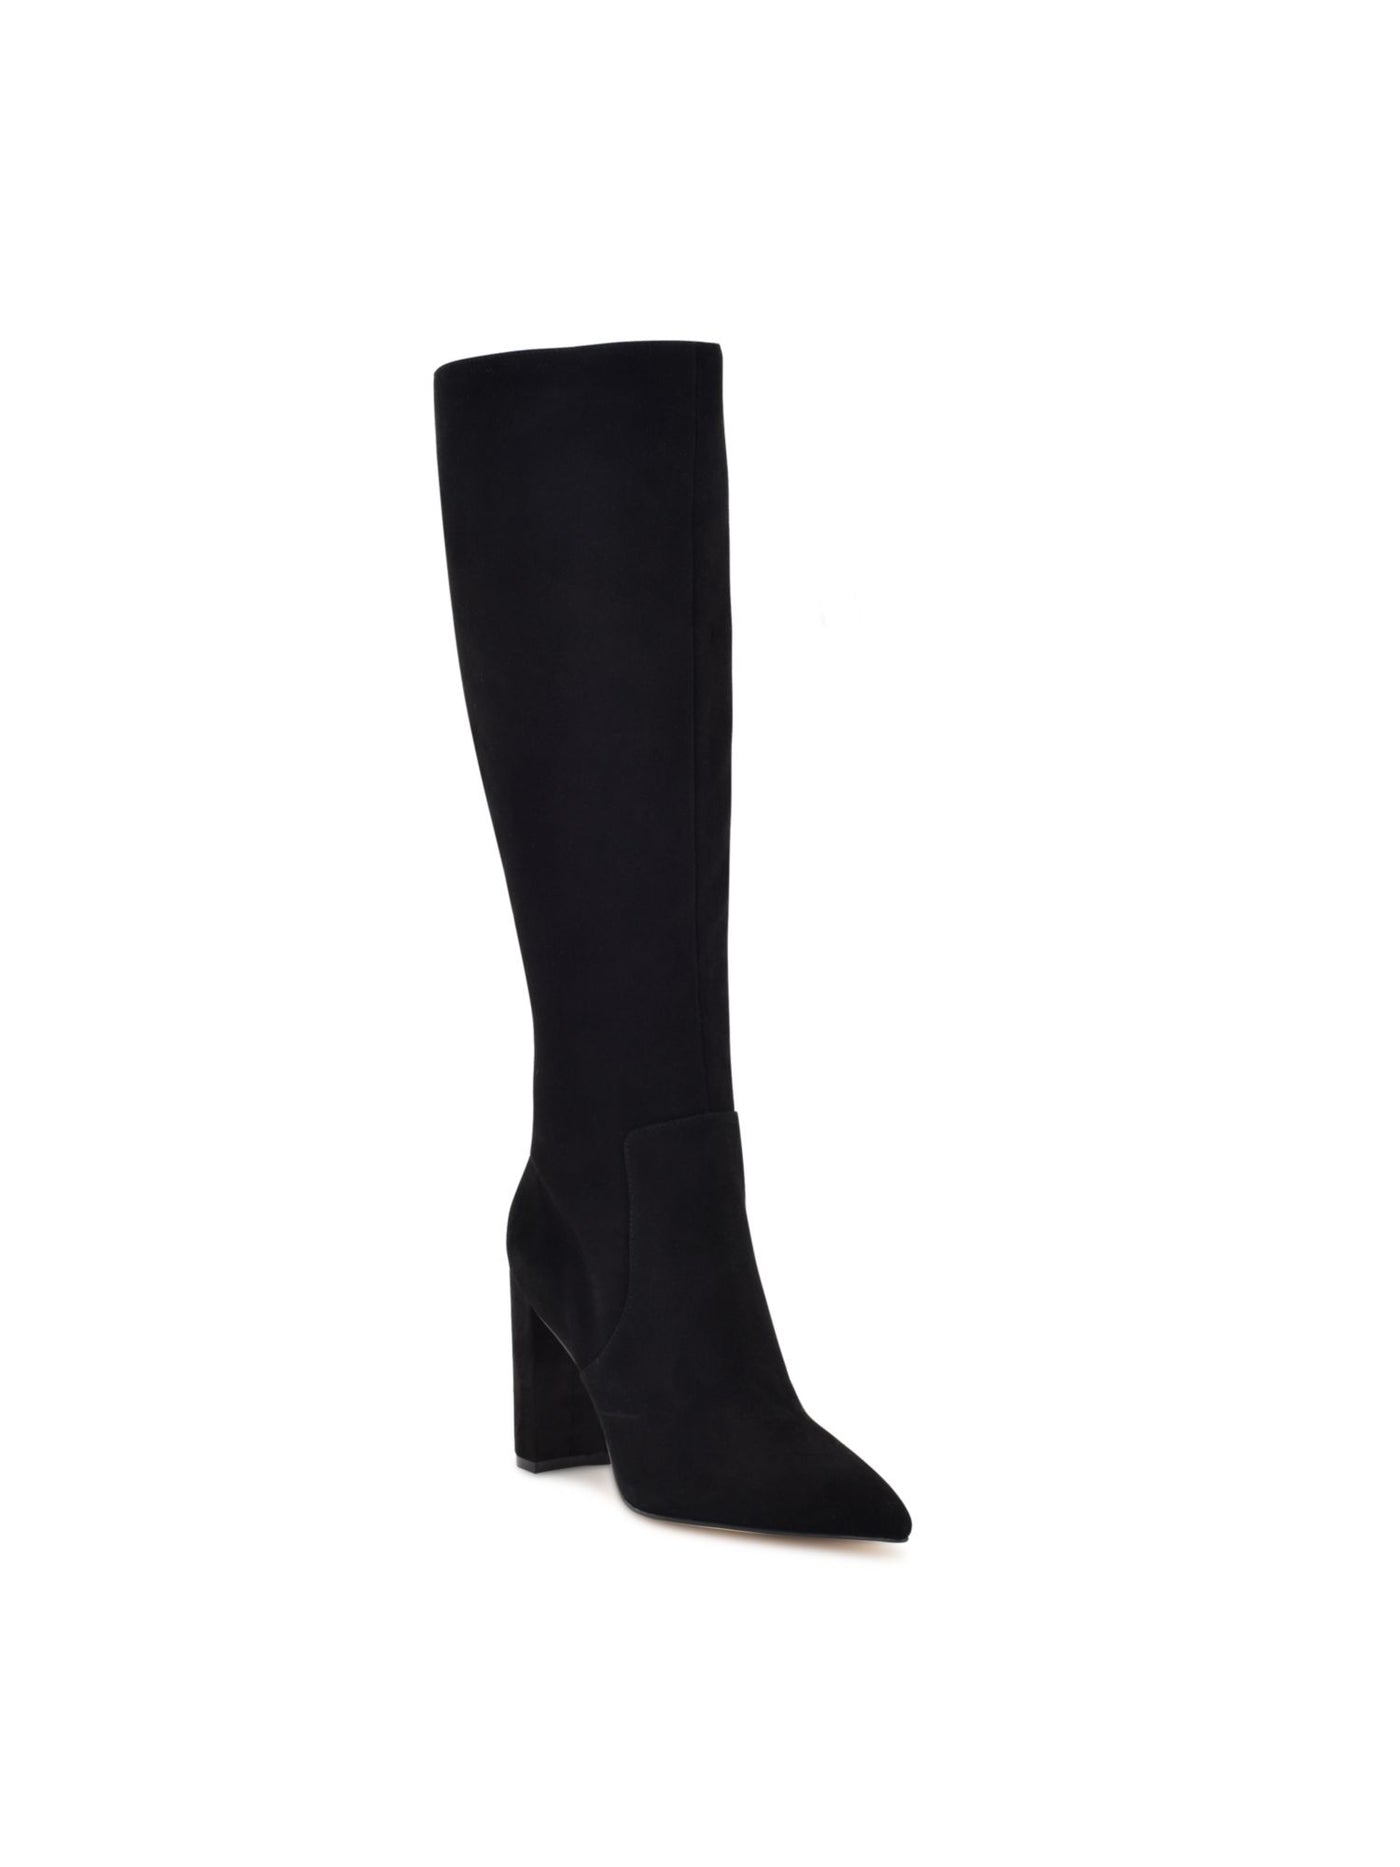 NINE WEST Womens Black Comfort Danee Pointy Toe Block Heel Zip-Up Leather Boots Shoes 6.5 M